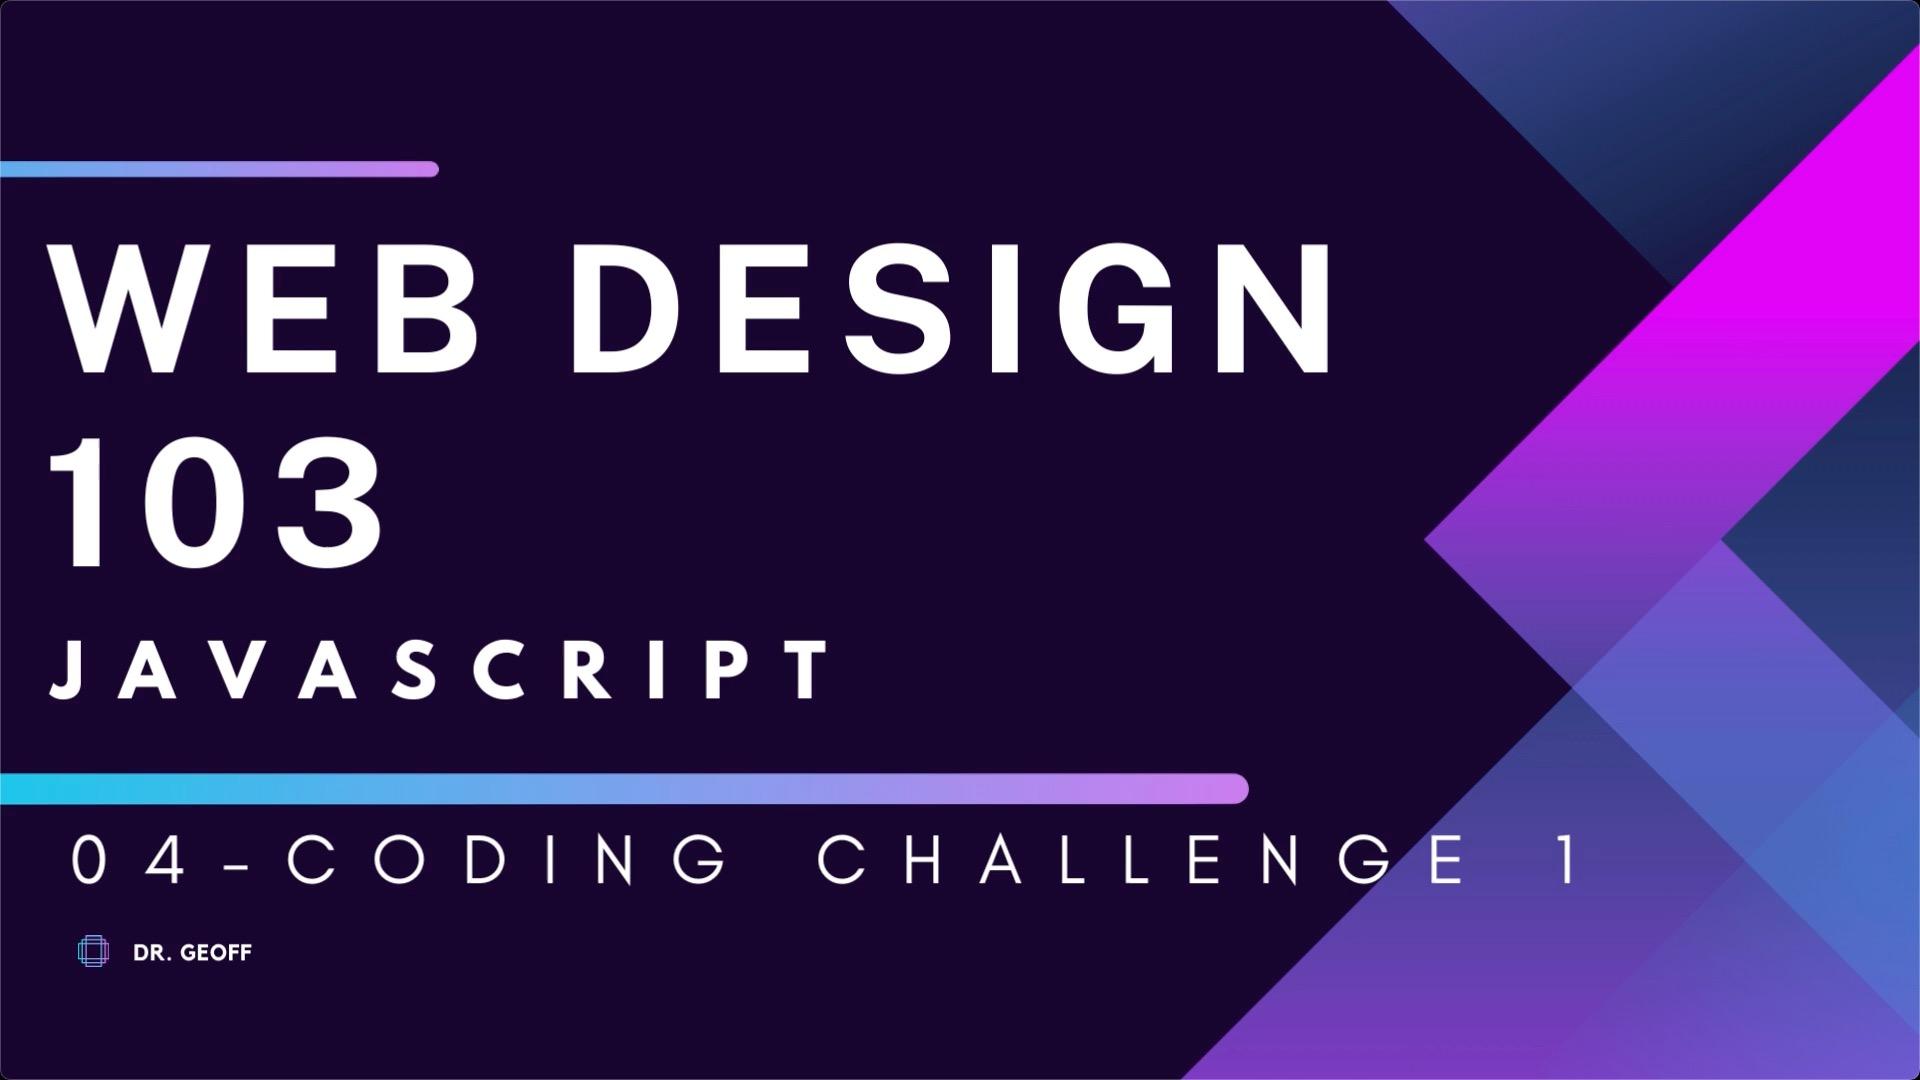 04 - Coding Challenge 1